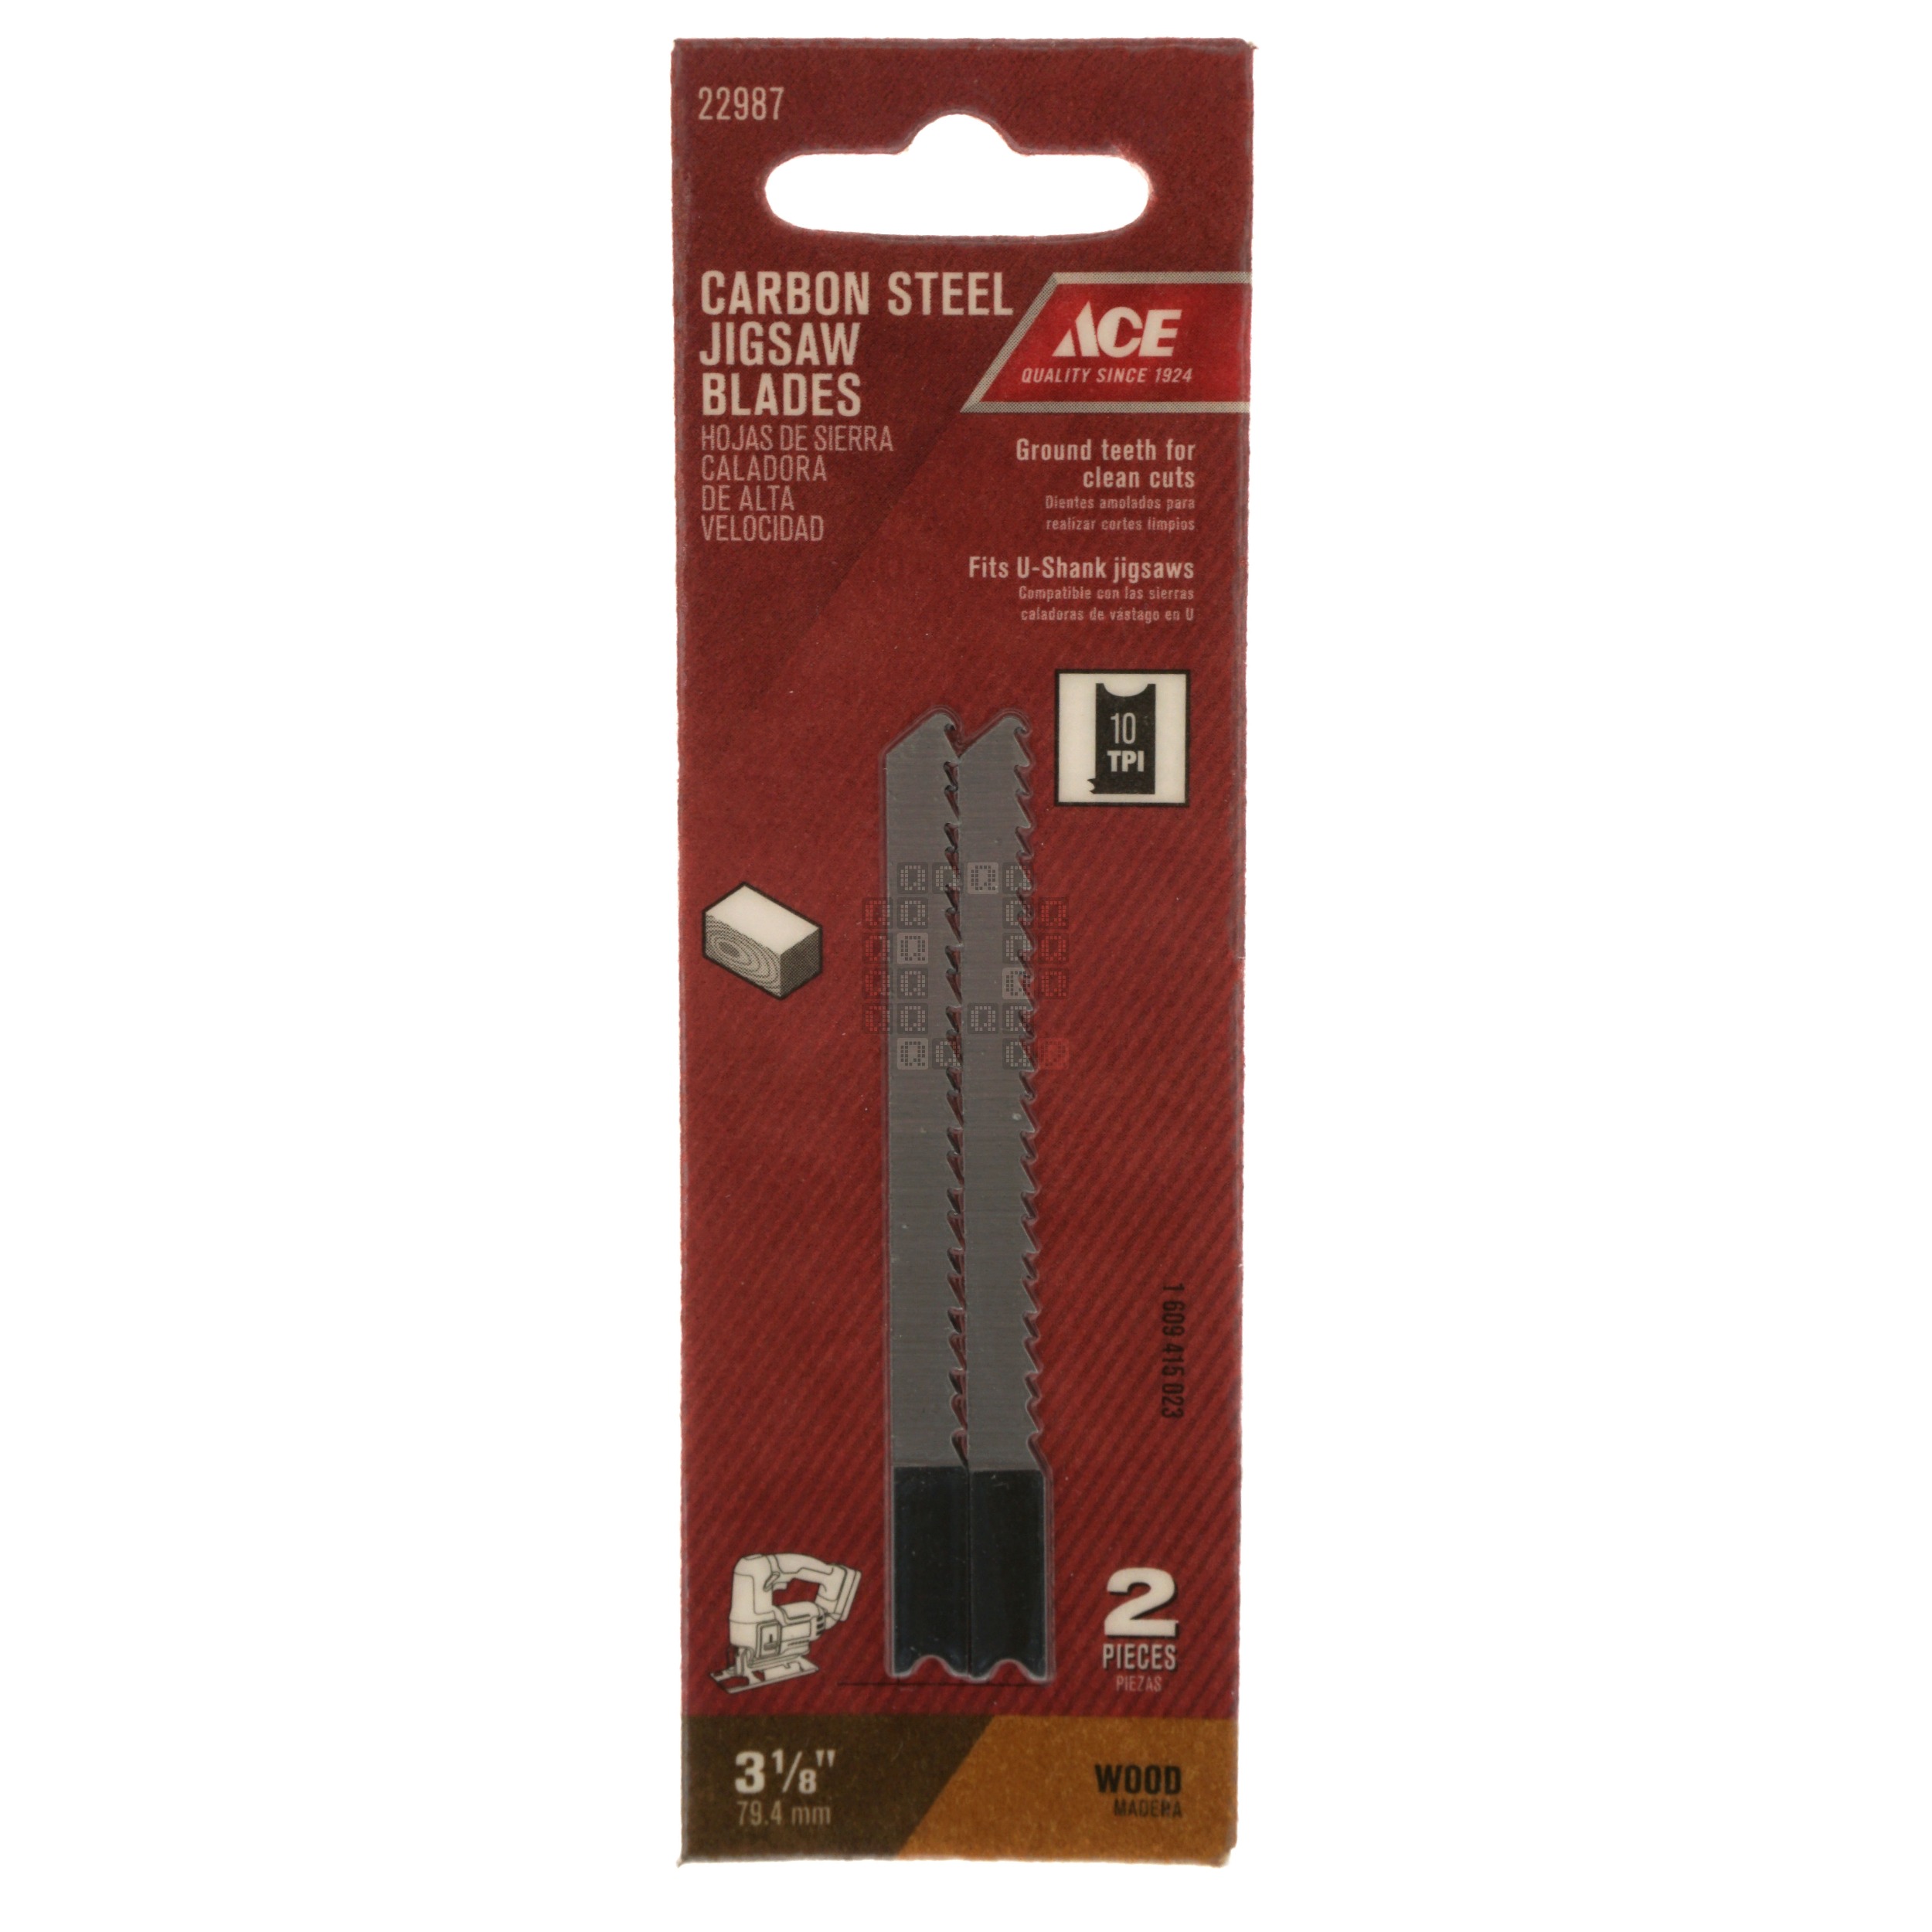 ACE Hardware 22987 Carbon Steel Jigsaw Blades, 10TPI 3-1/8" Length, 2-Pack